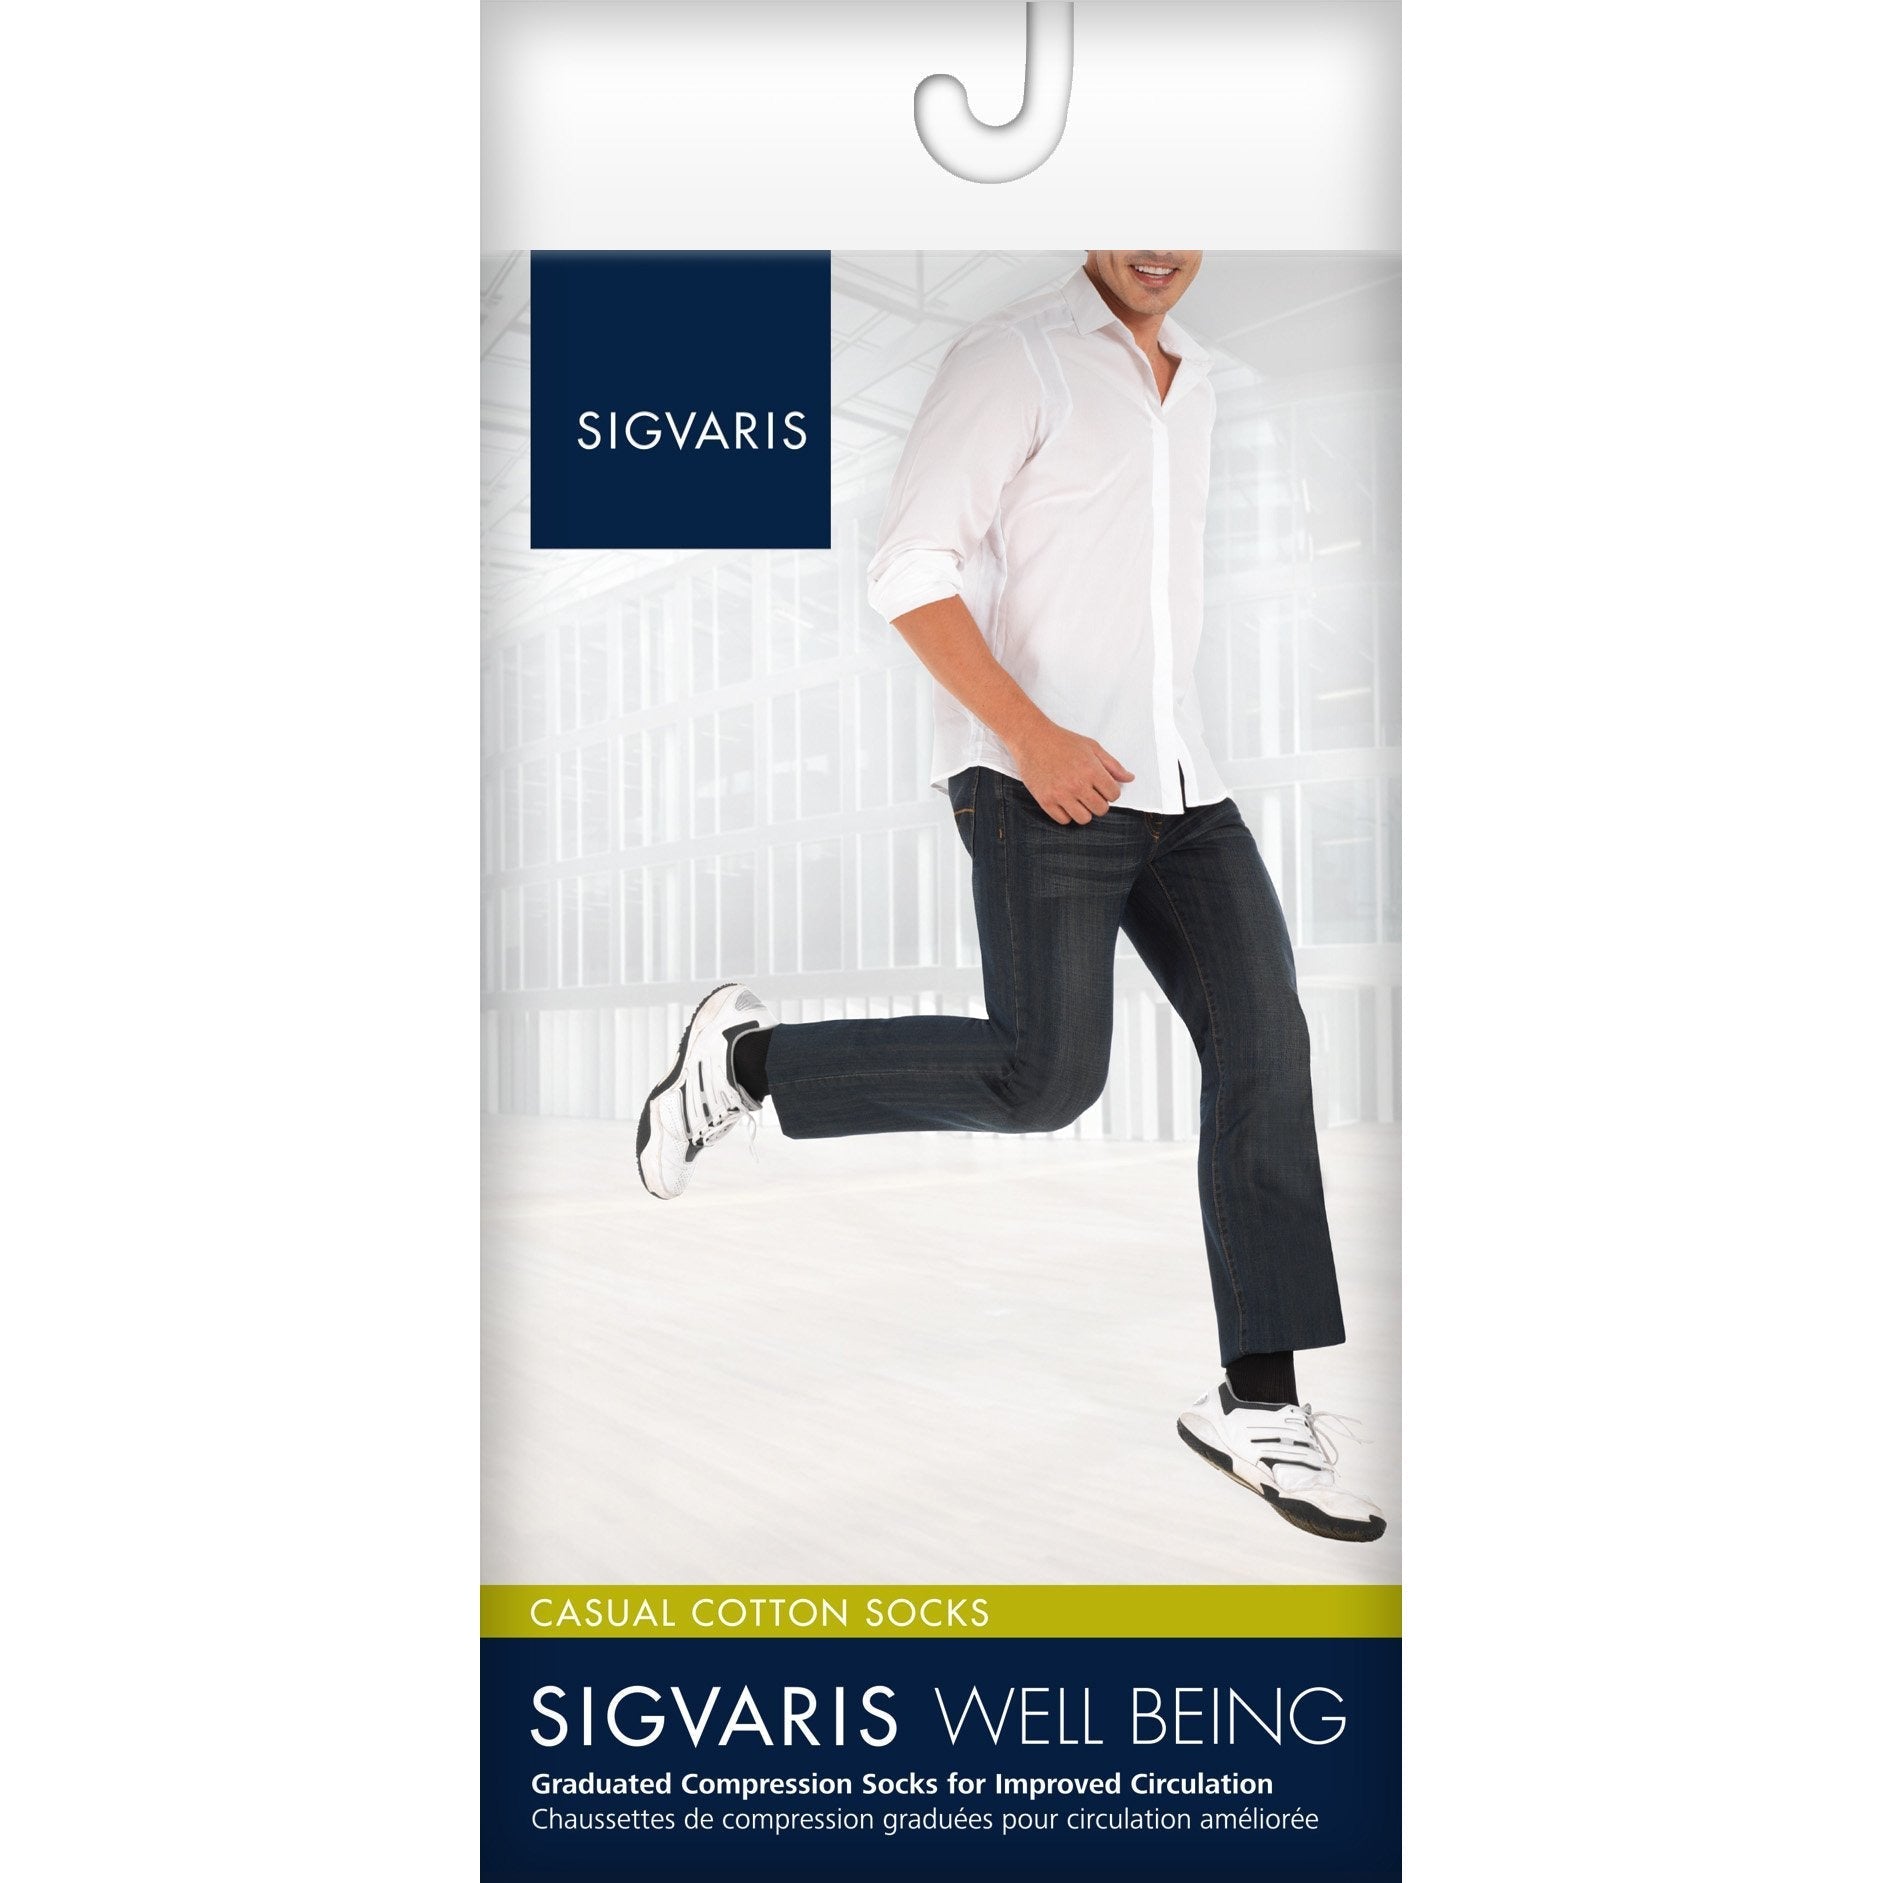 Sigvaris Casual Cotton Men's 15-20mmHg Knee High